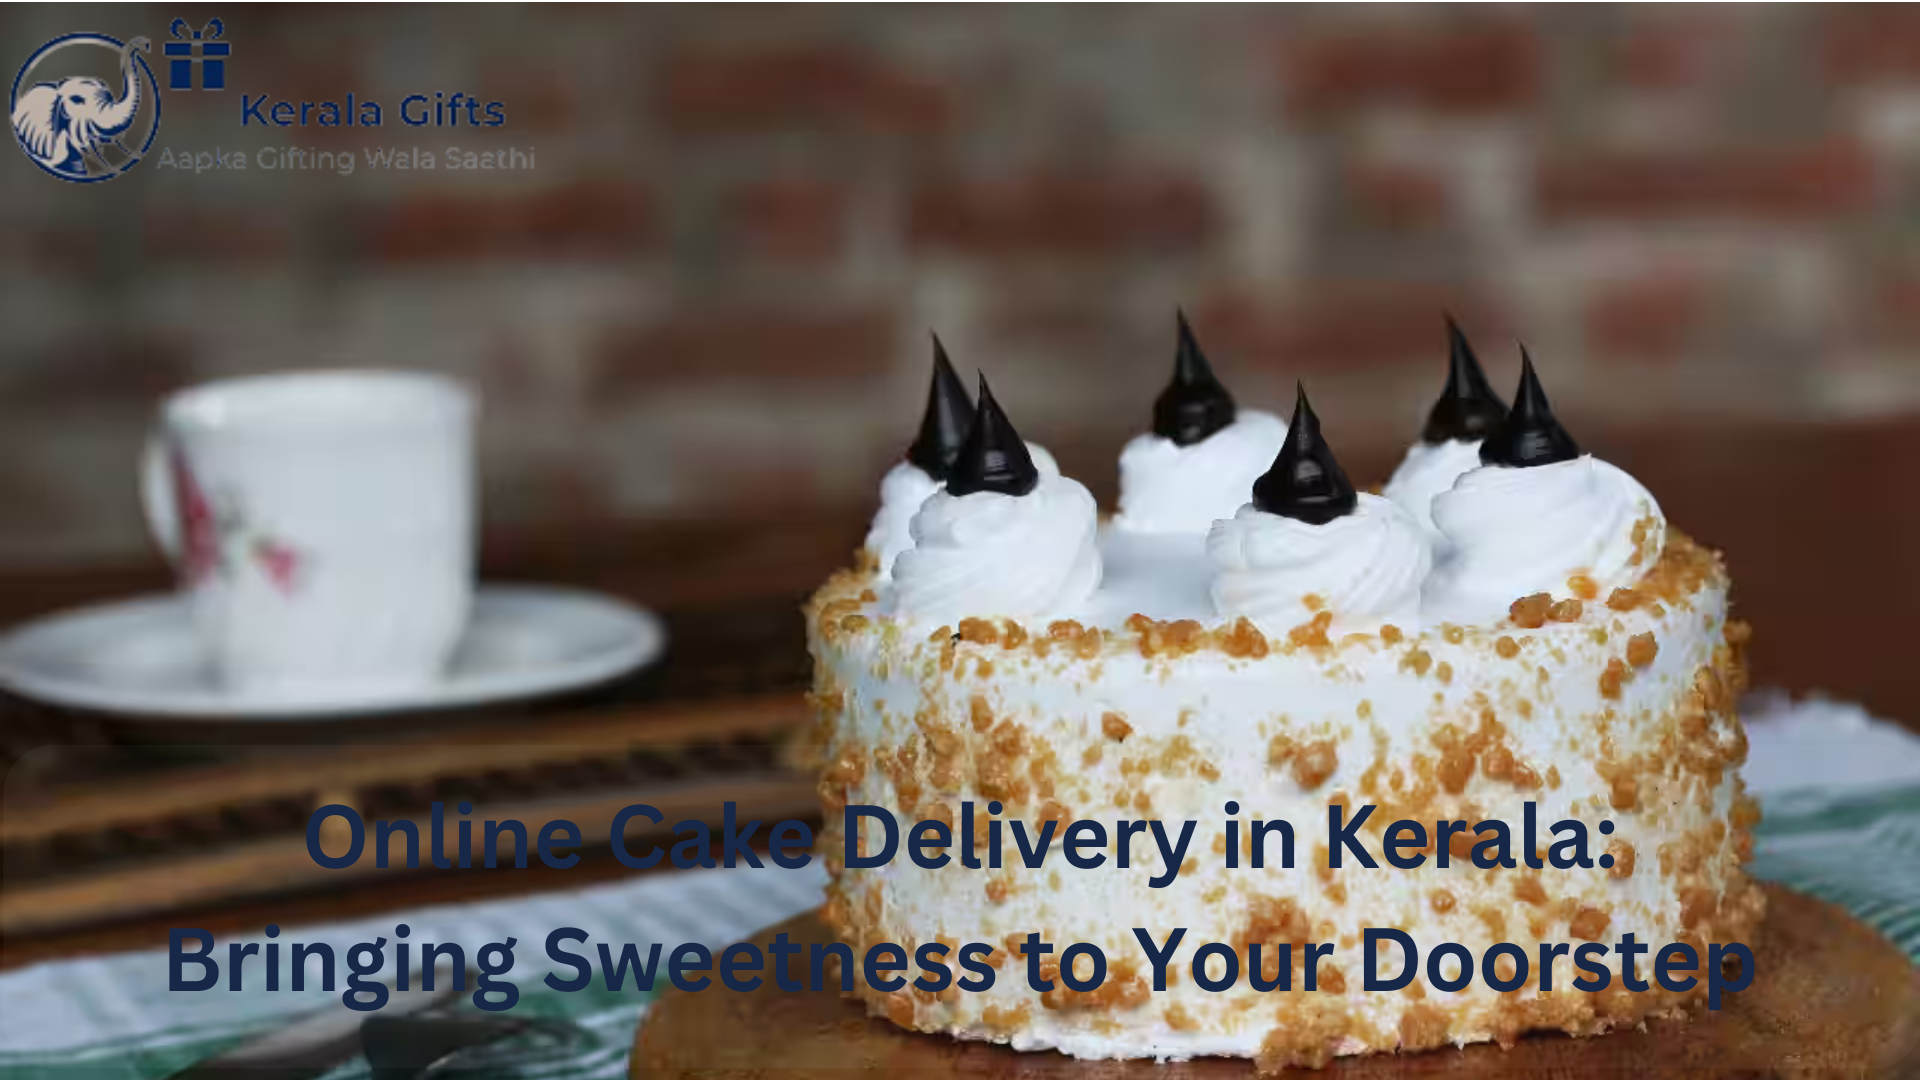 Online Cake Delivery in Kerala: Bringing Sweetness to Your Doorstep